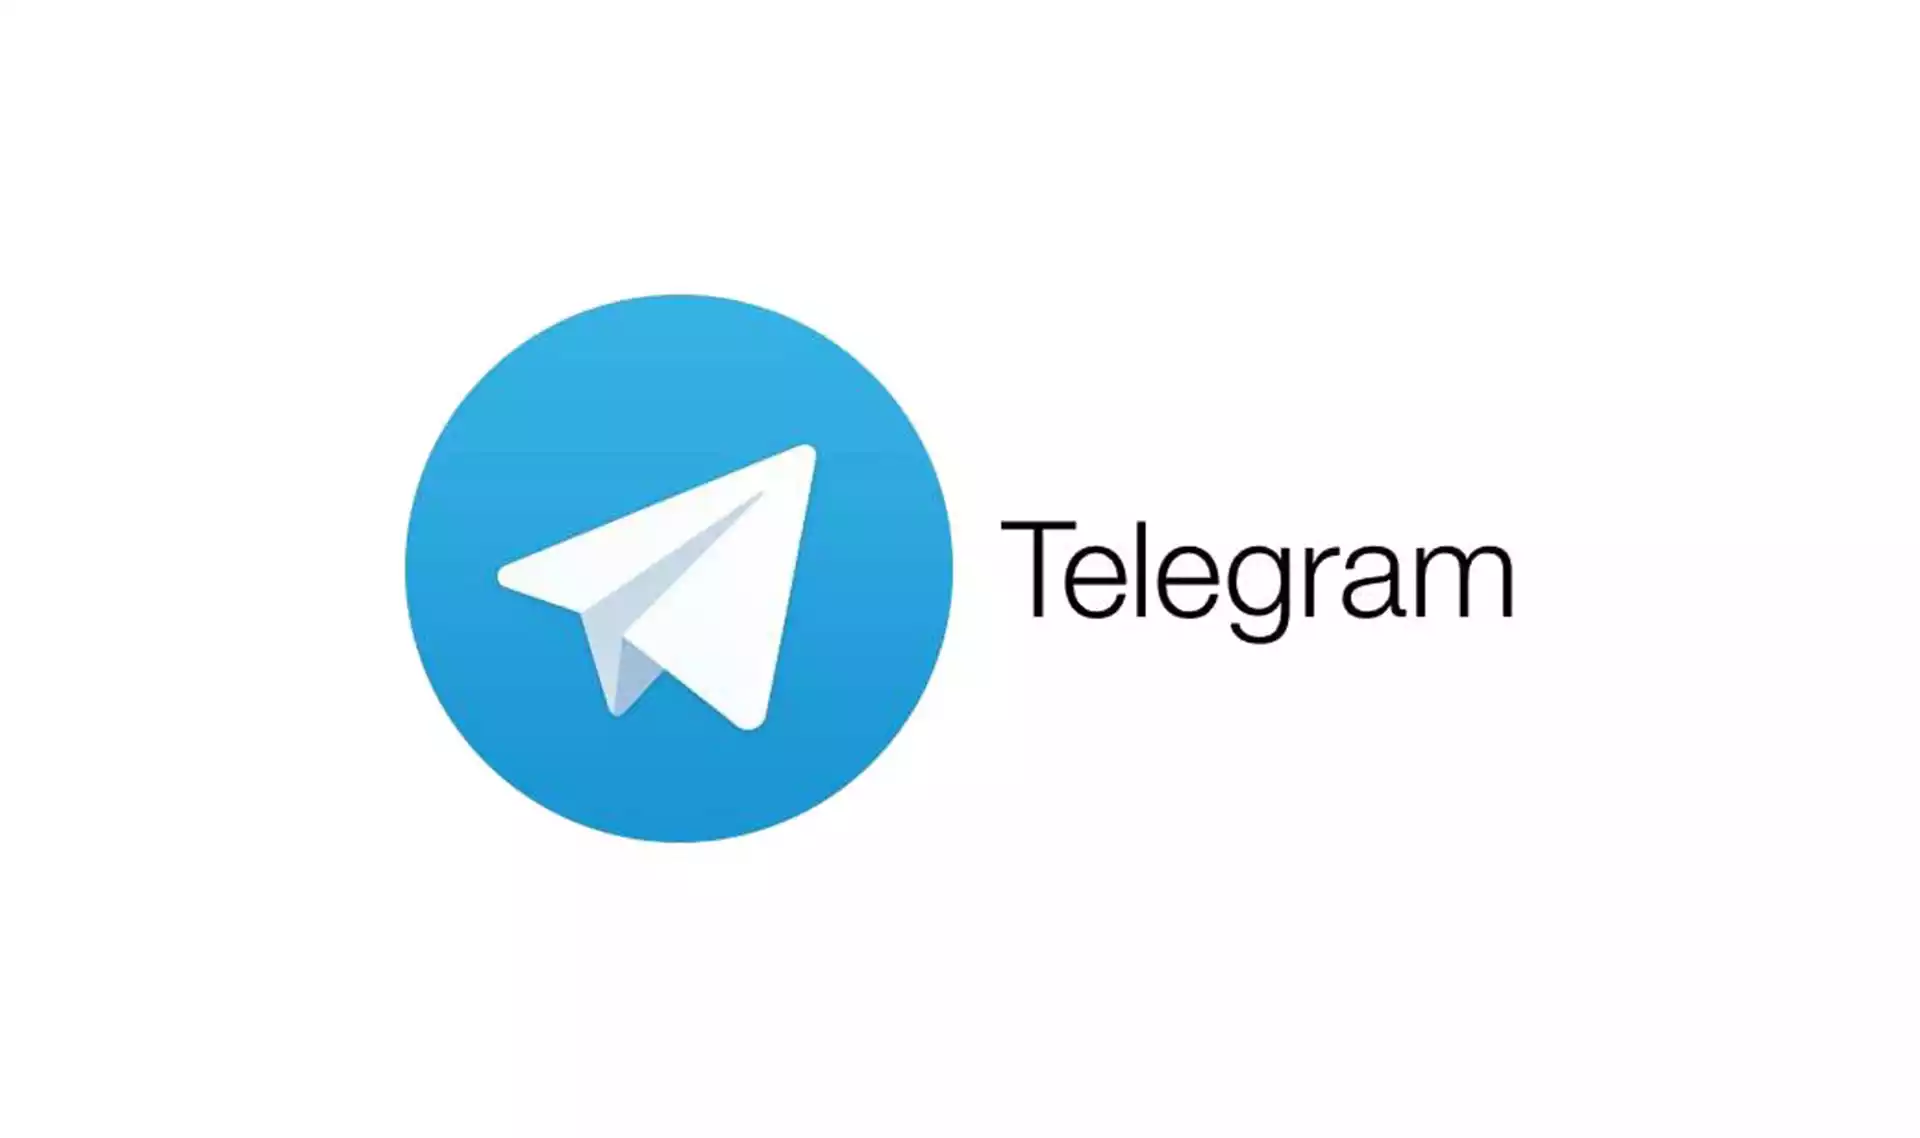 telegram机器人bot向电报群内自动定时发送消息或图片